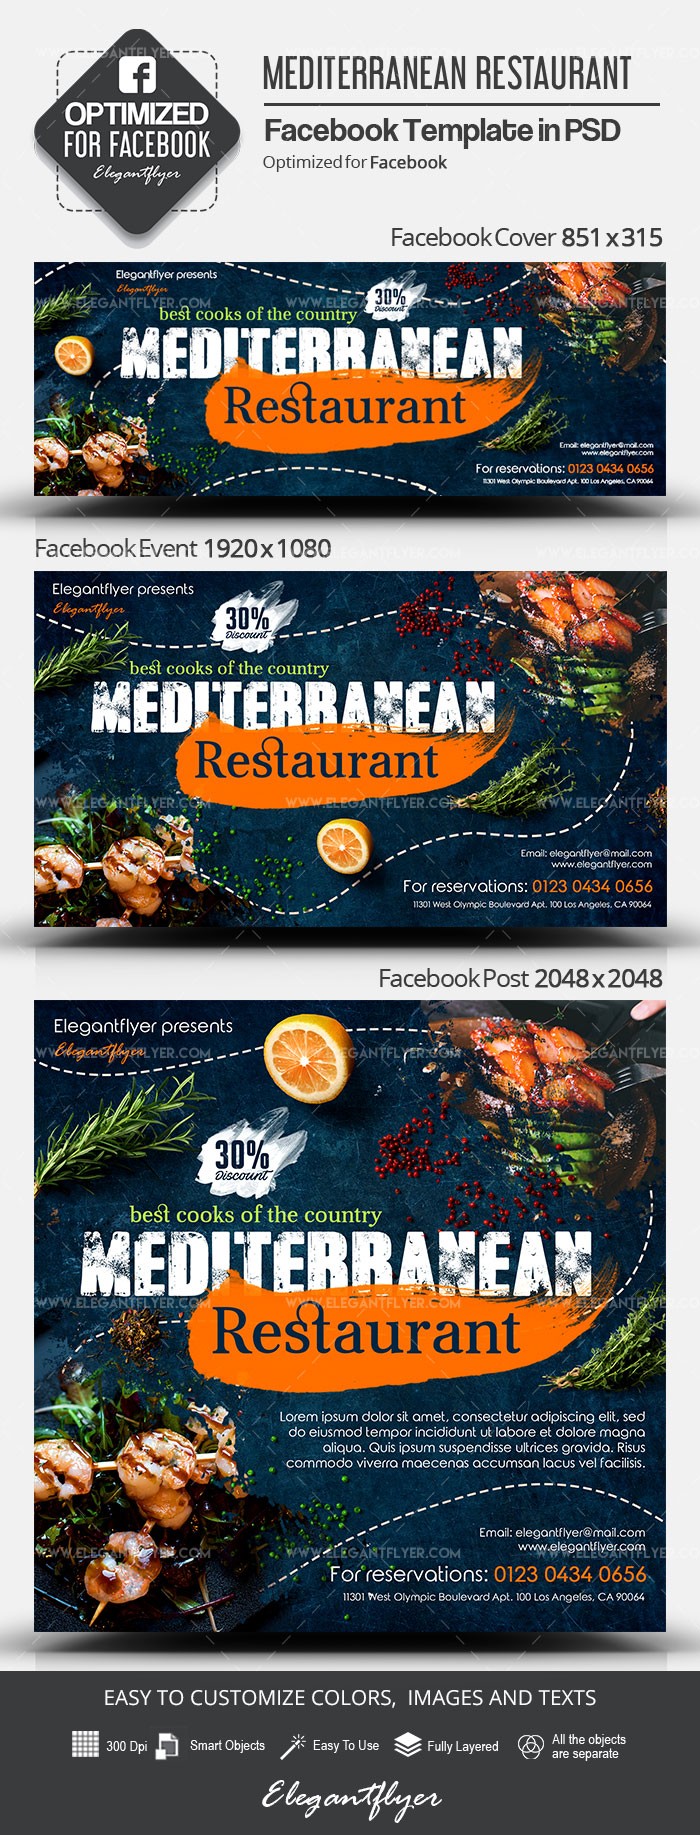 Restaurante mediterráneo de Facebook by ElegantFlyer